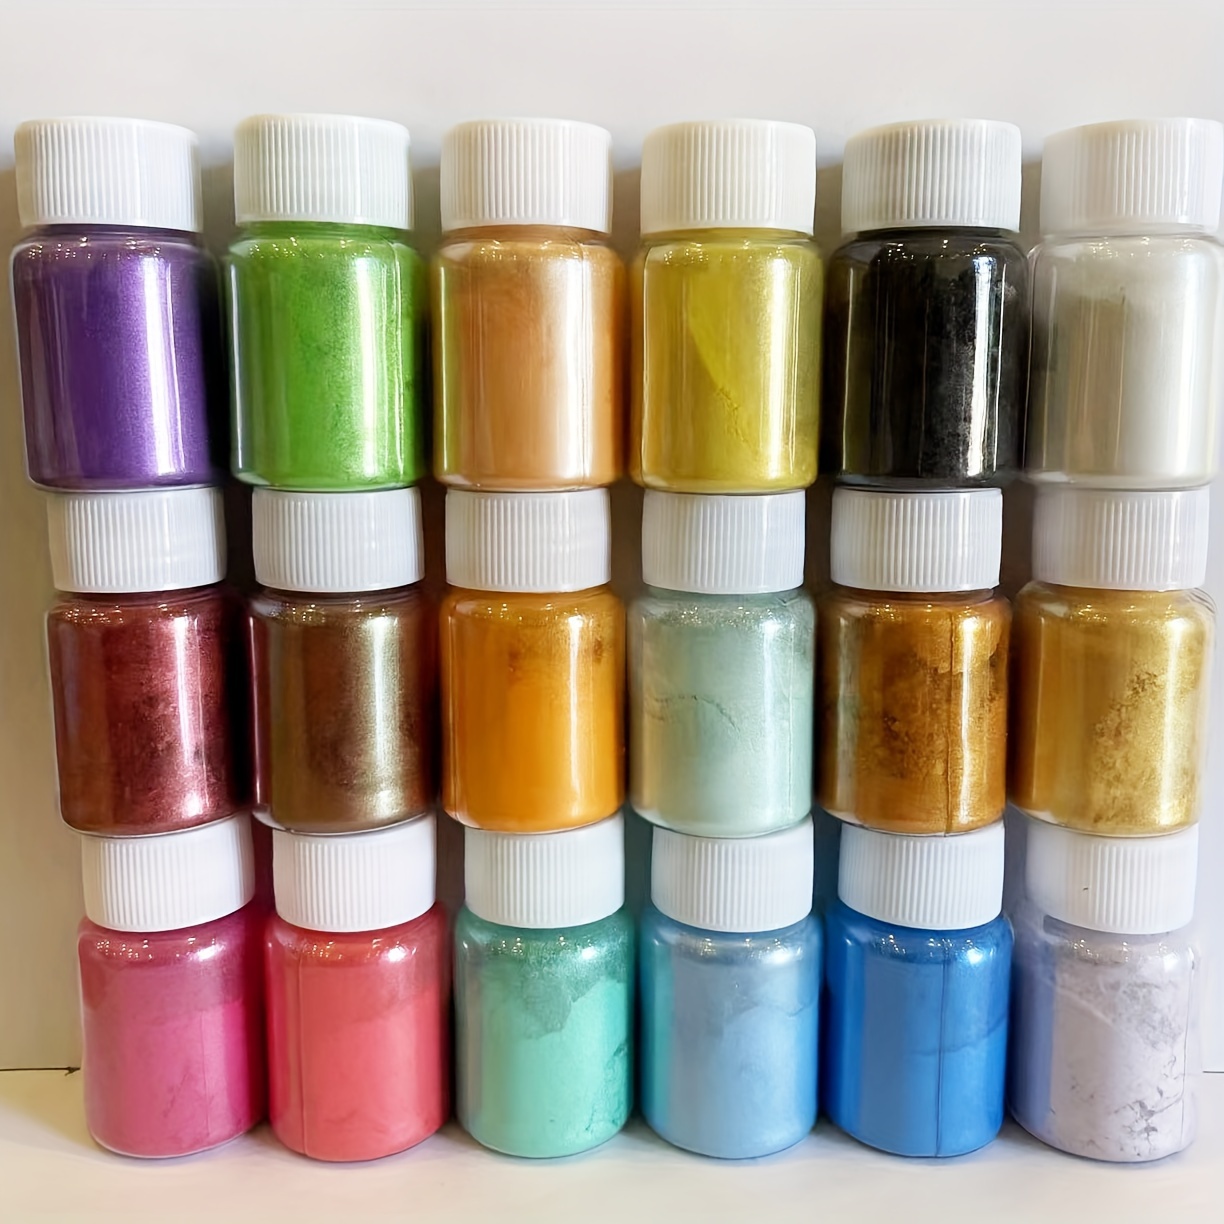 Mermaid Dust - Epoxy Resin Color Pigment - Mica Powder 50g